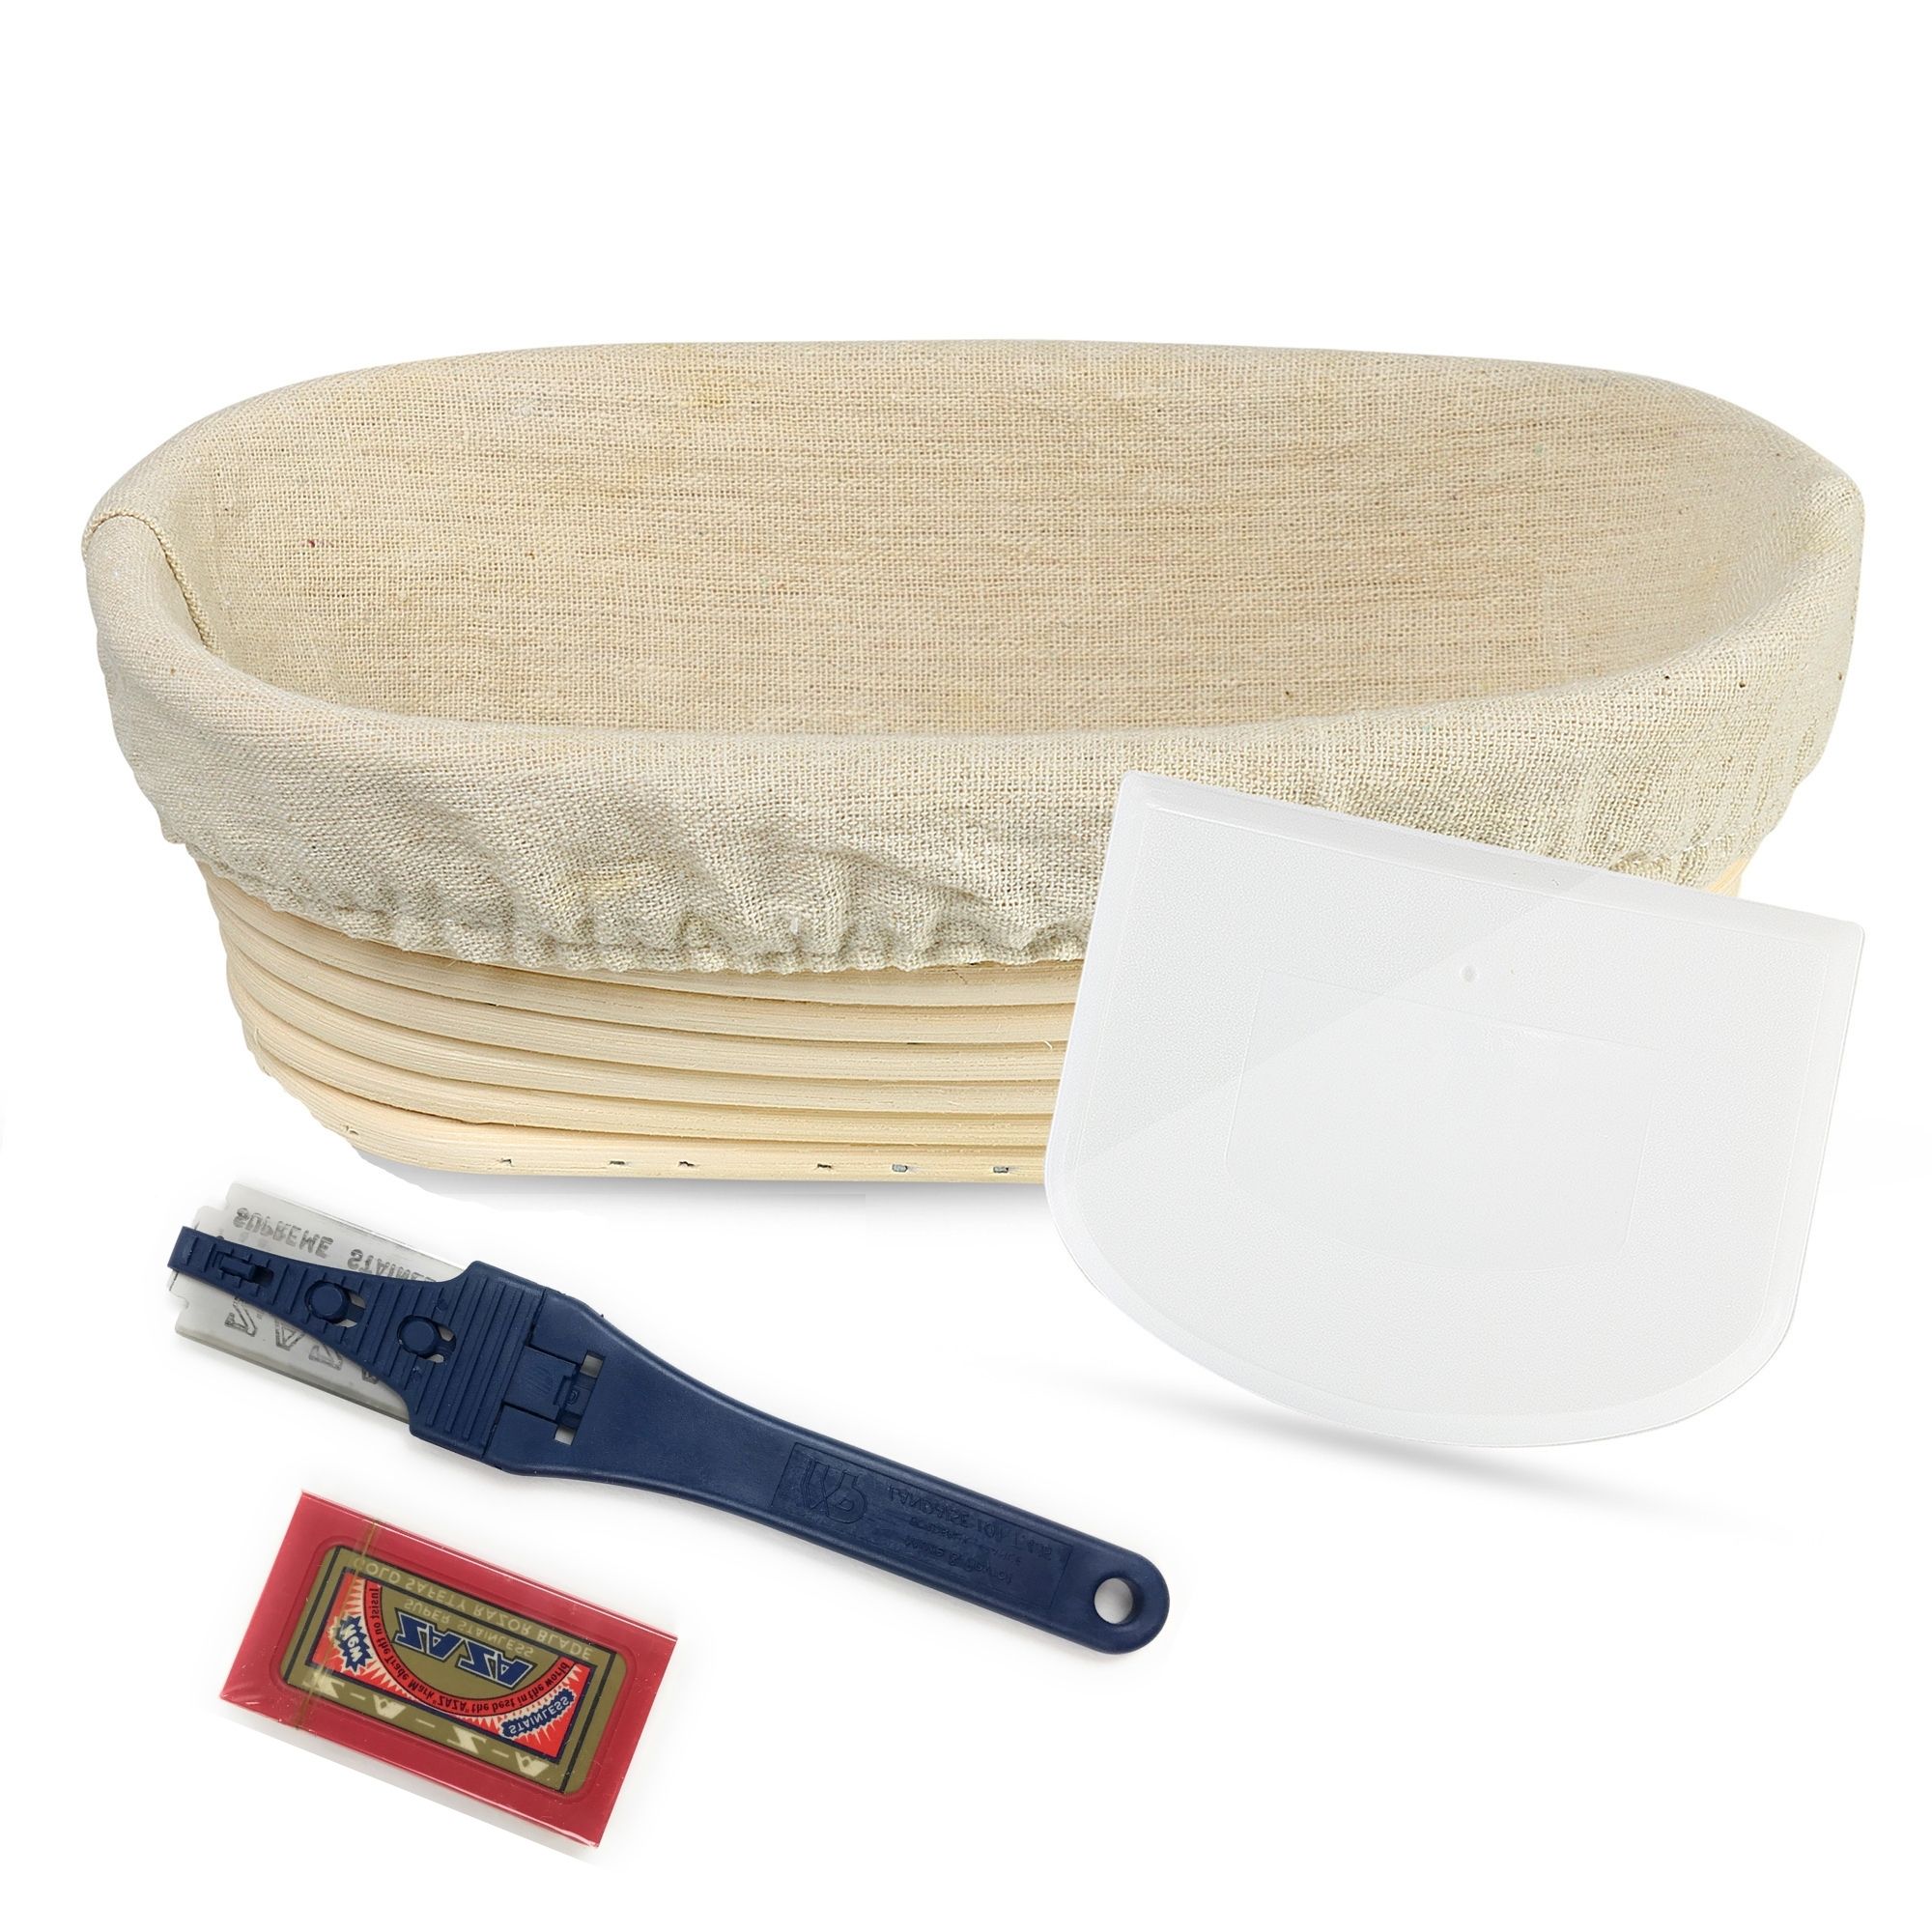 Plastic Food Safe Oblong Brotform Banneton 10" Bread Proofing Basket with Cloth 